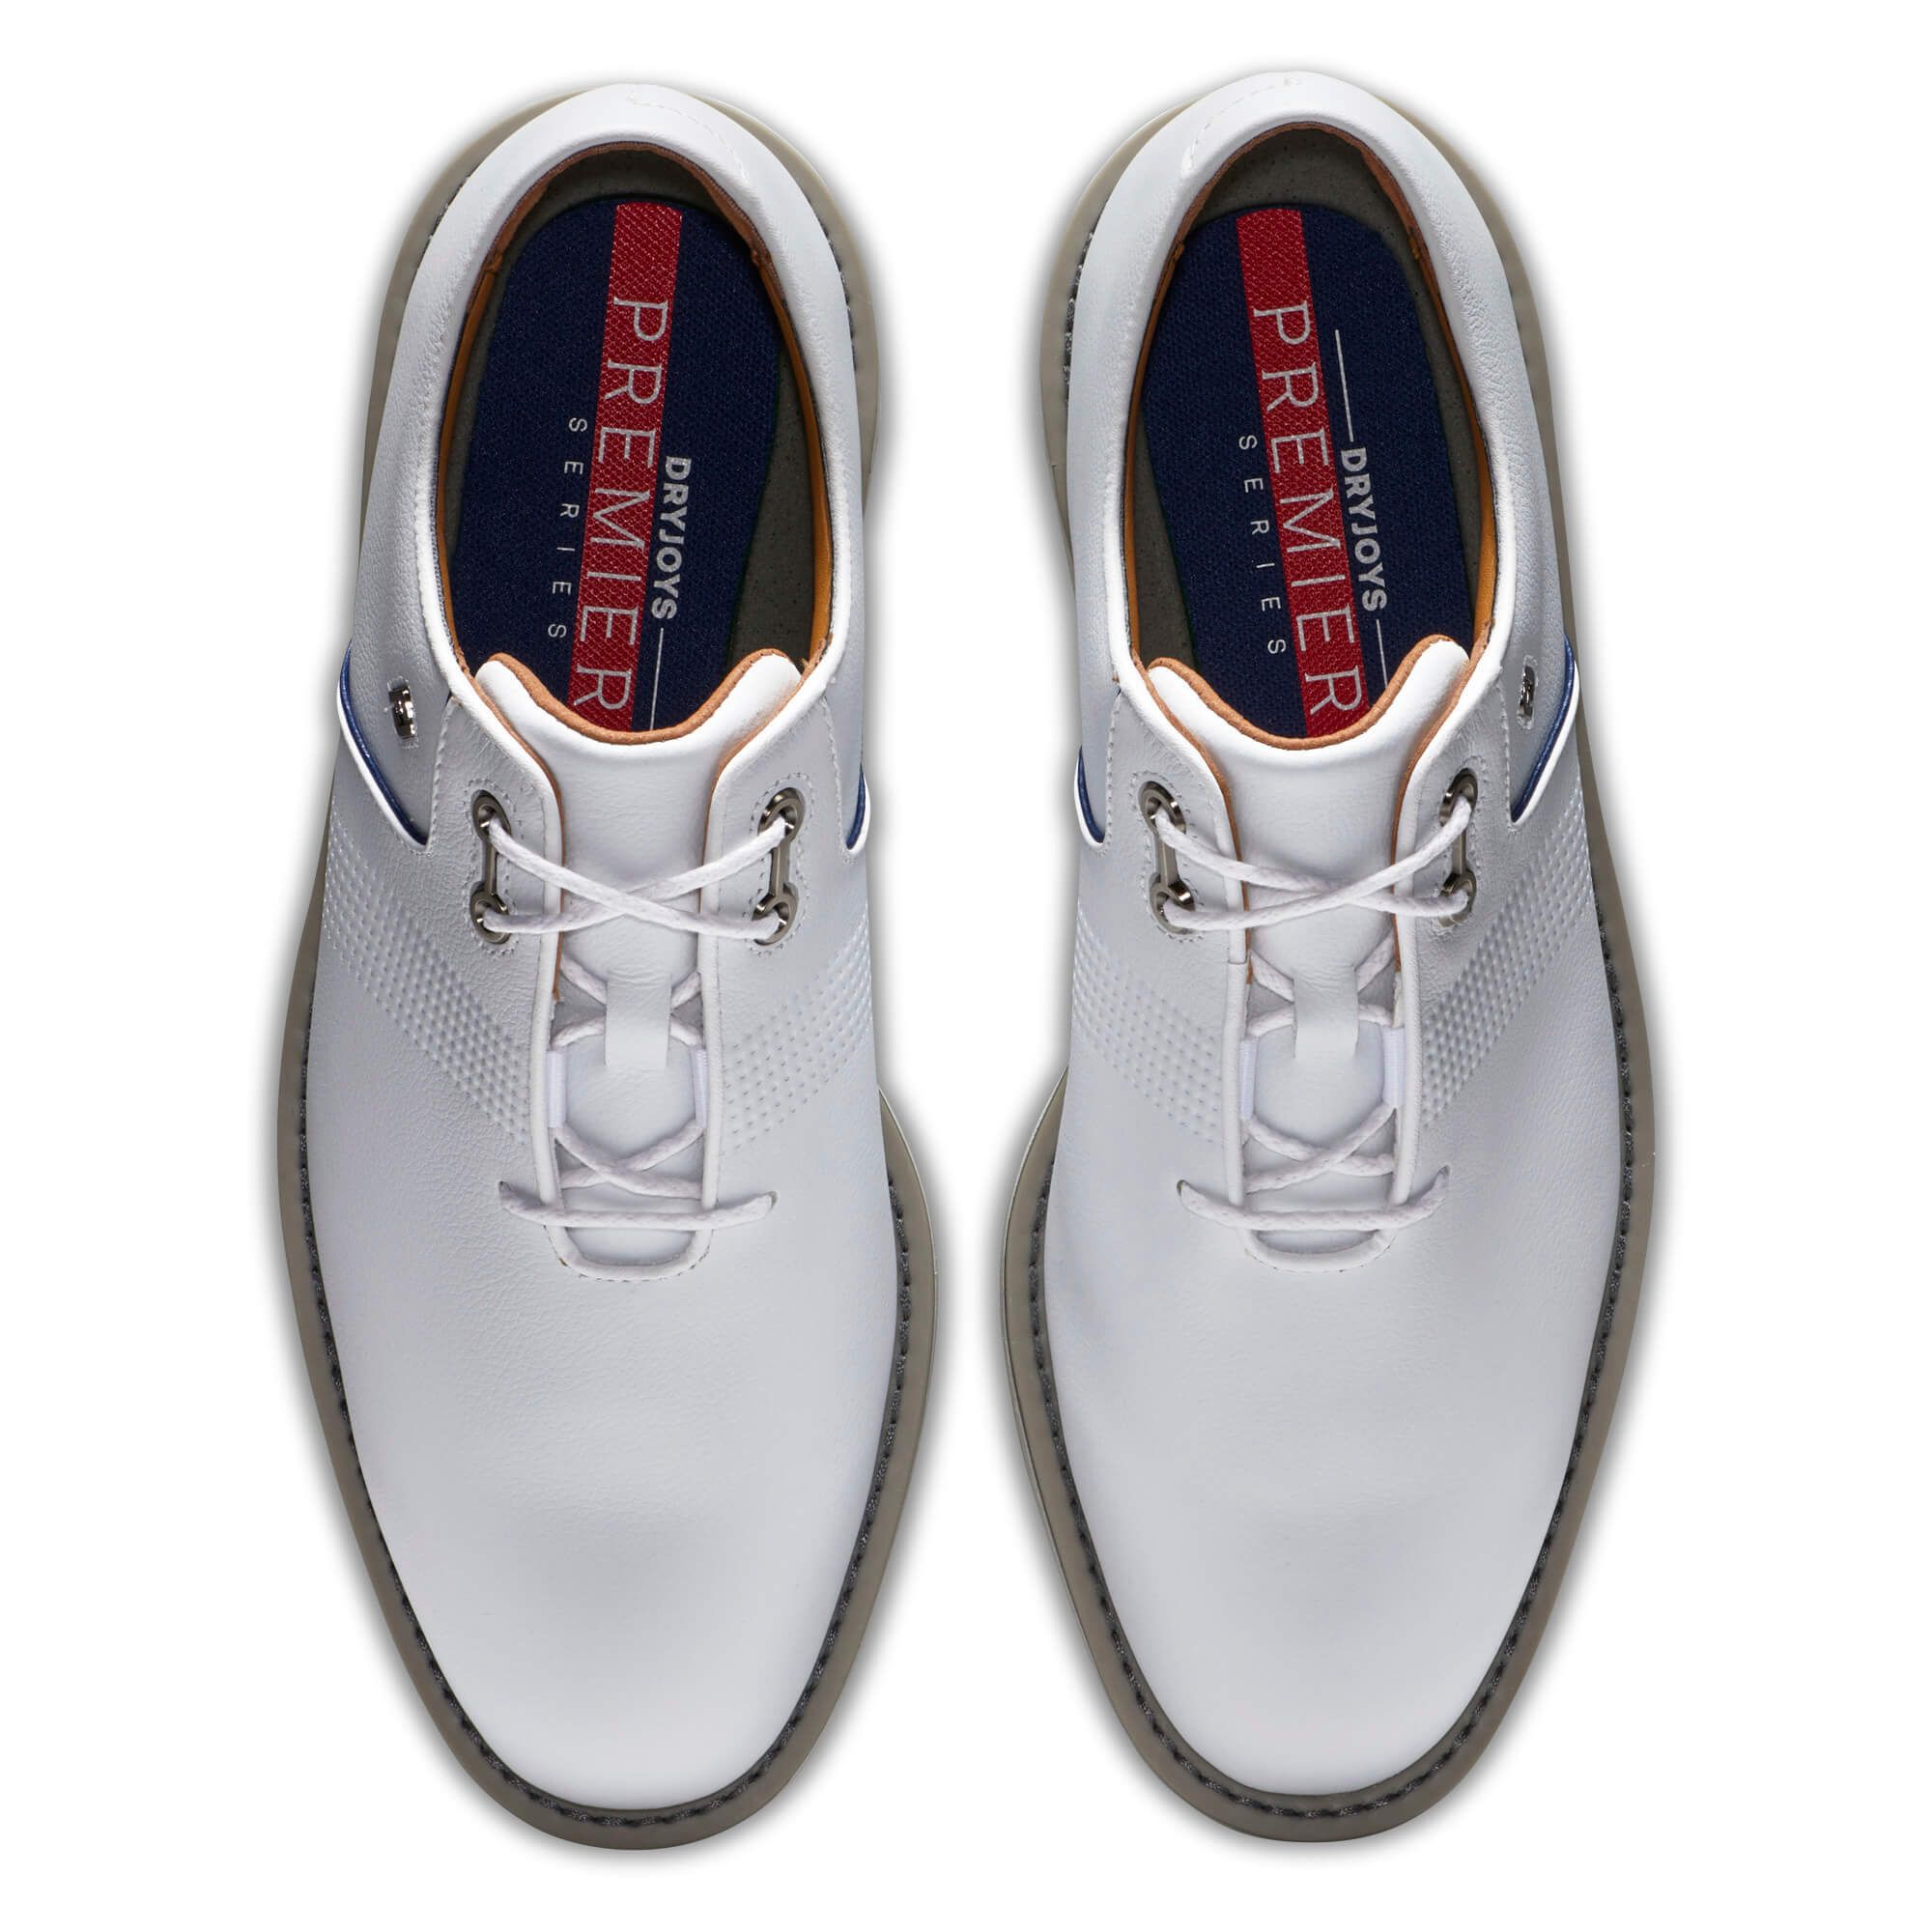 FootJoy Premiere Series Flint Golf Shoes #53922 White/Navy | Scottsdale ...